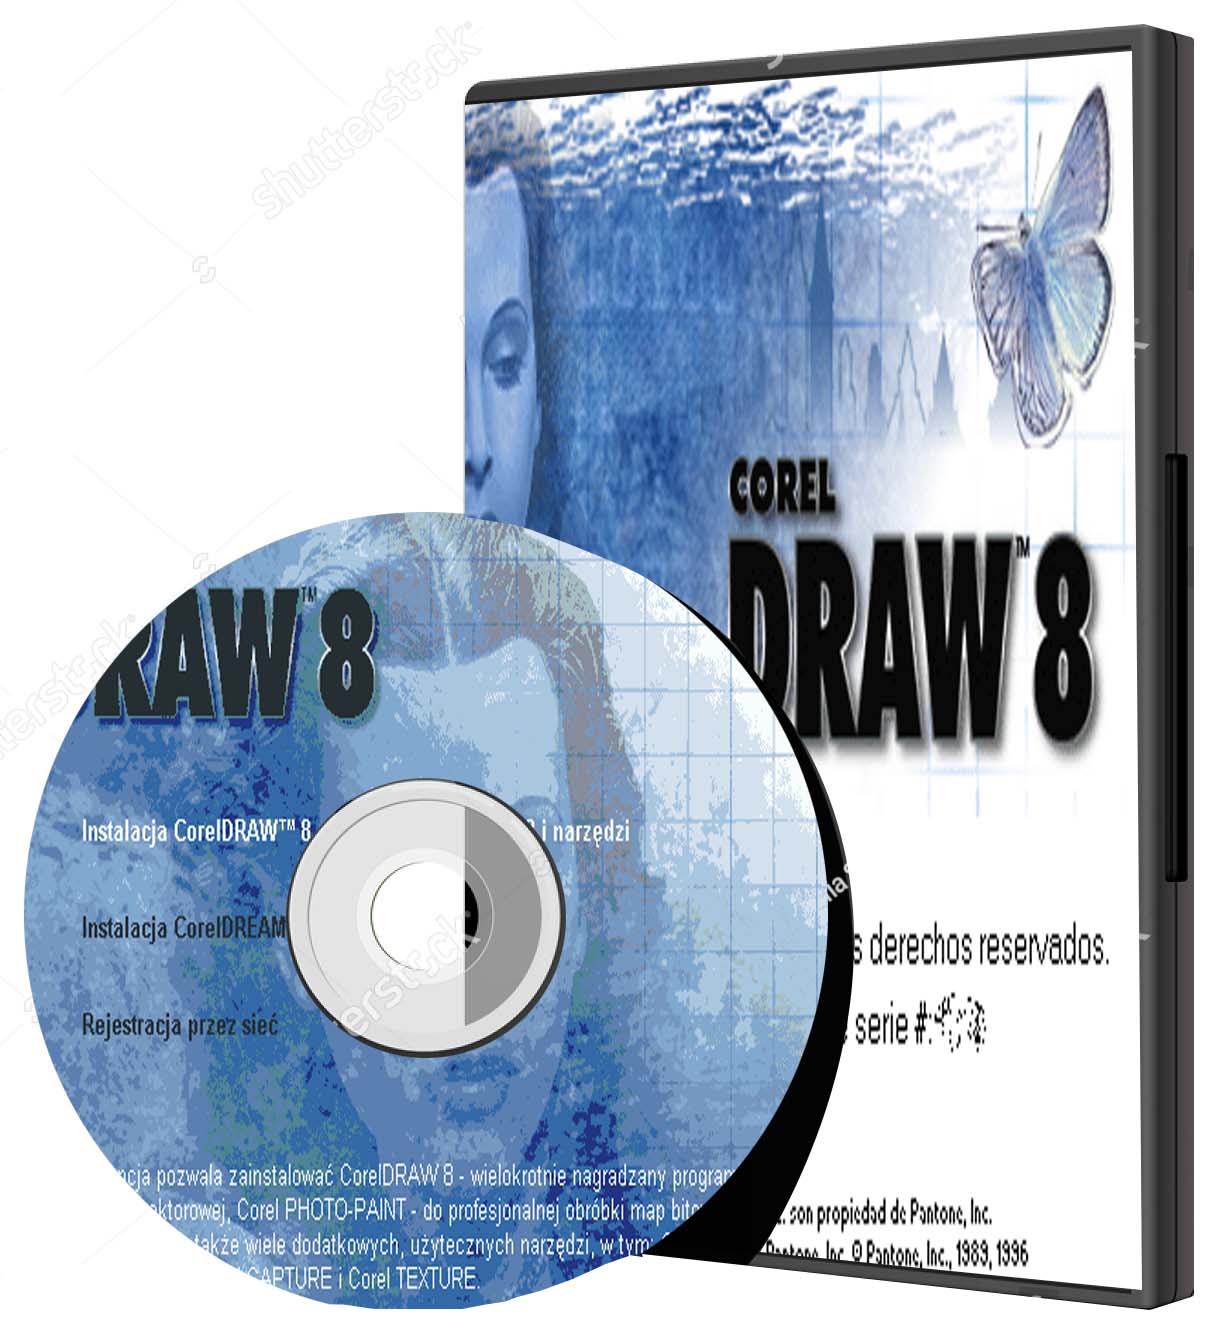 download free coreldraw for windows 8